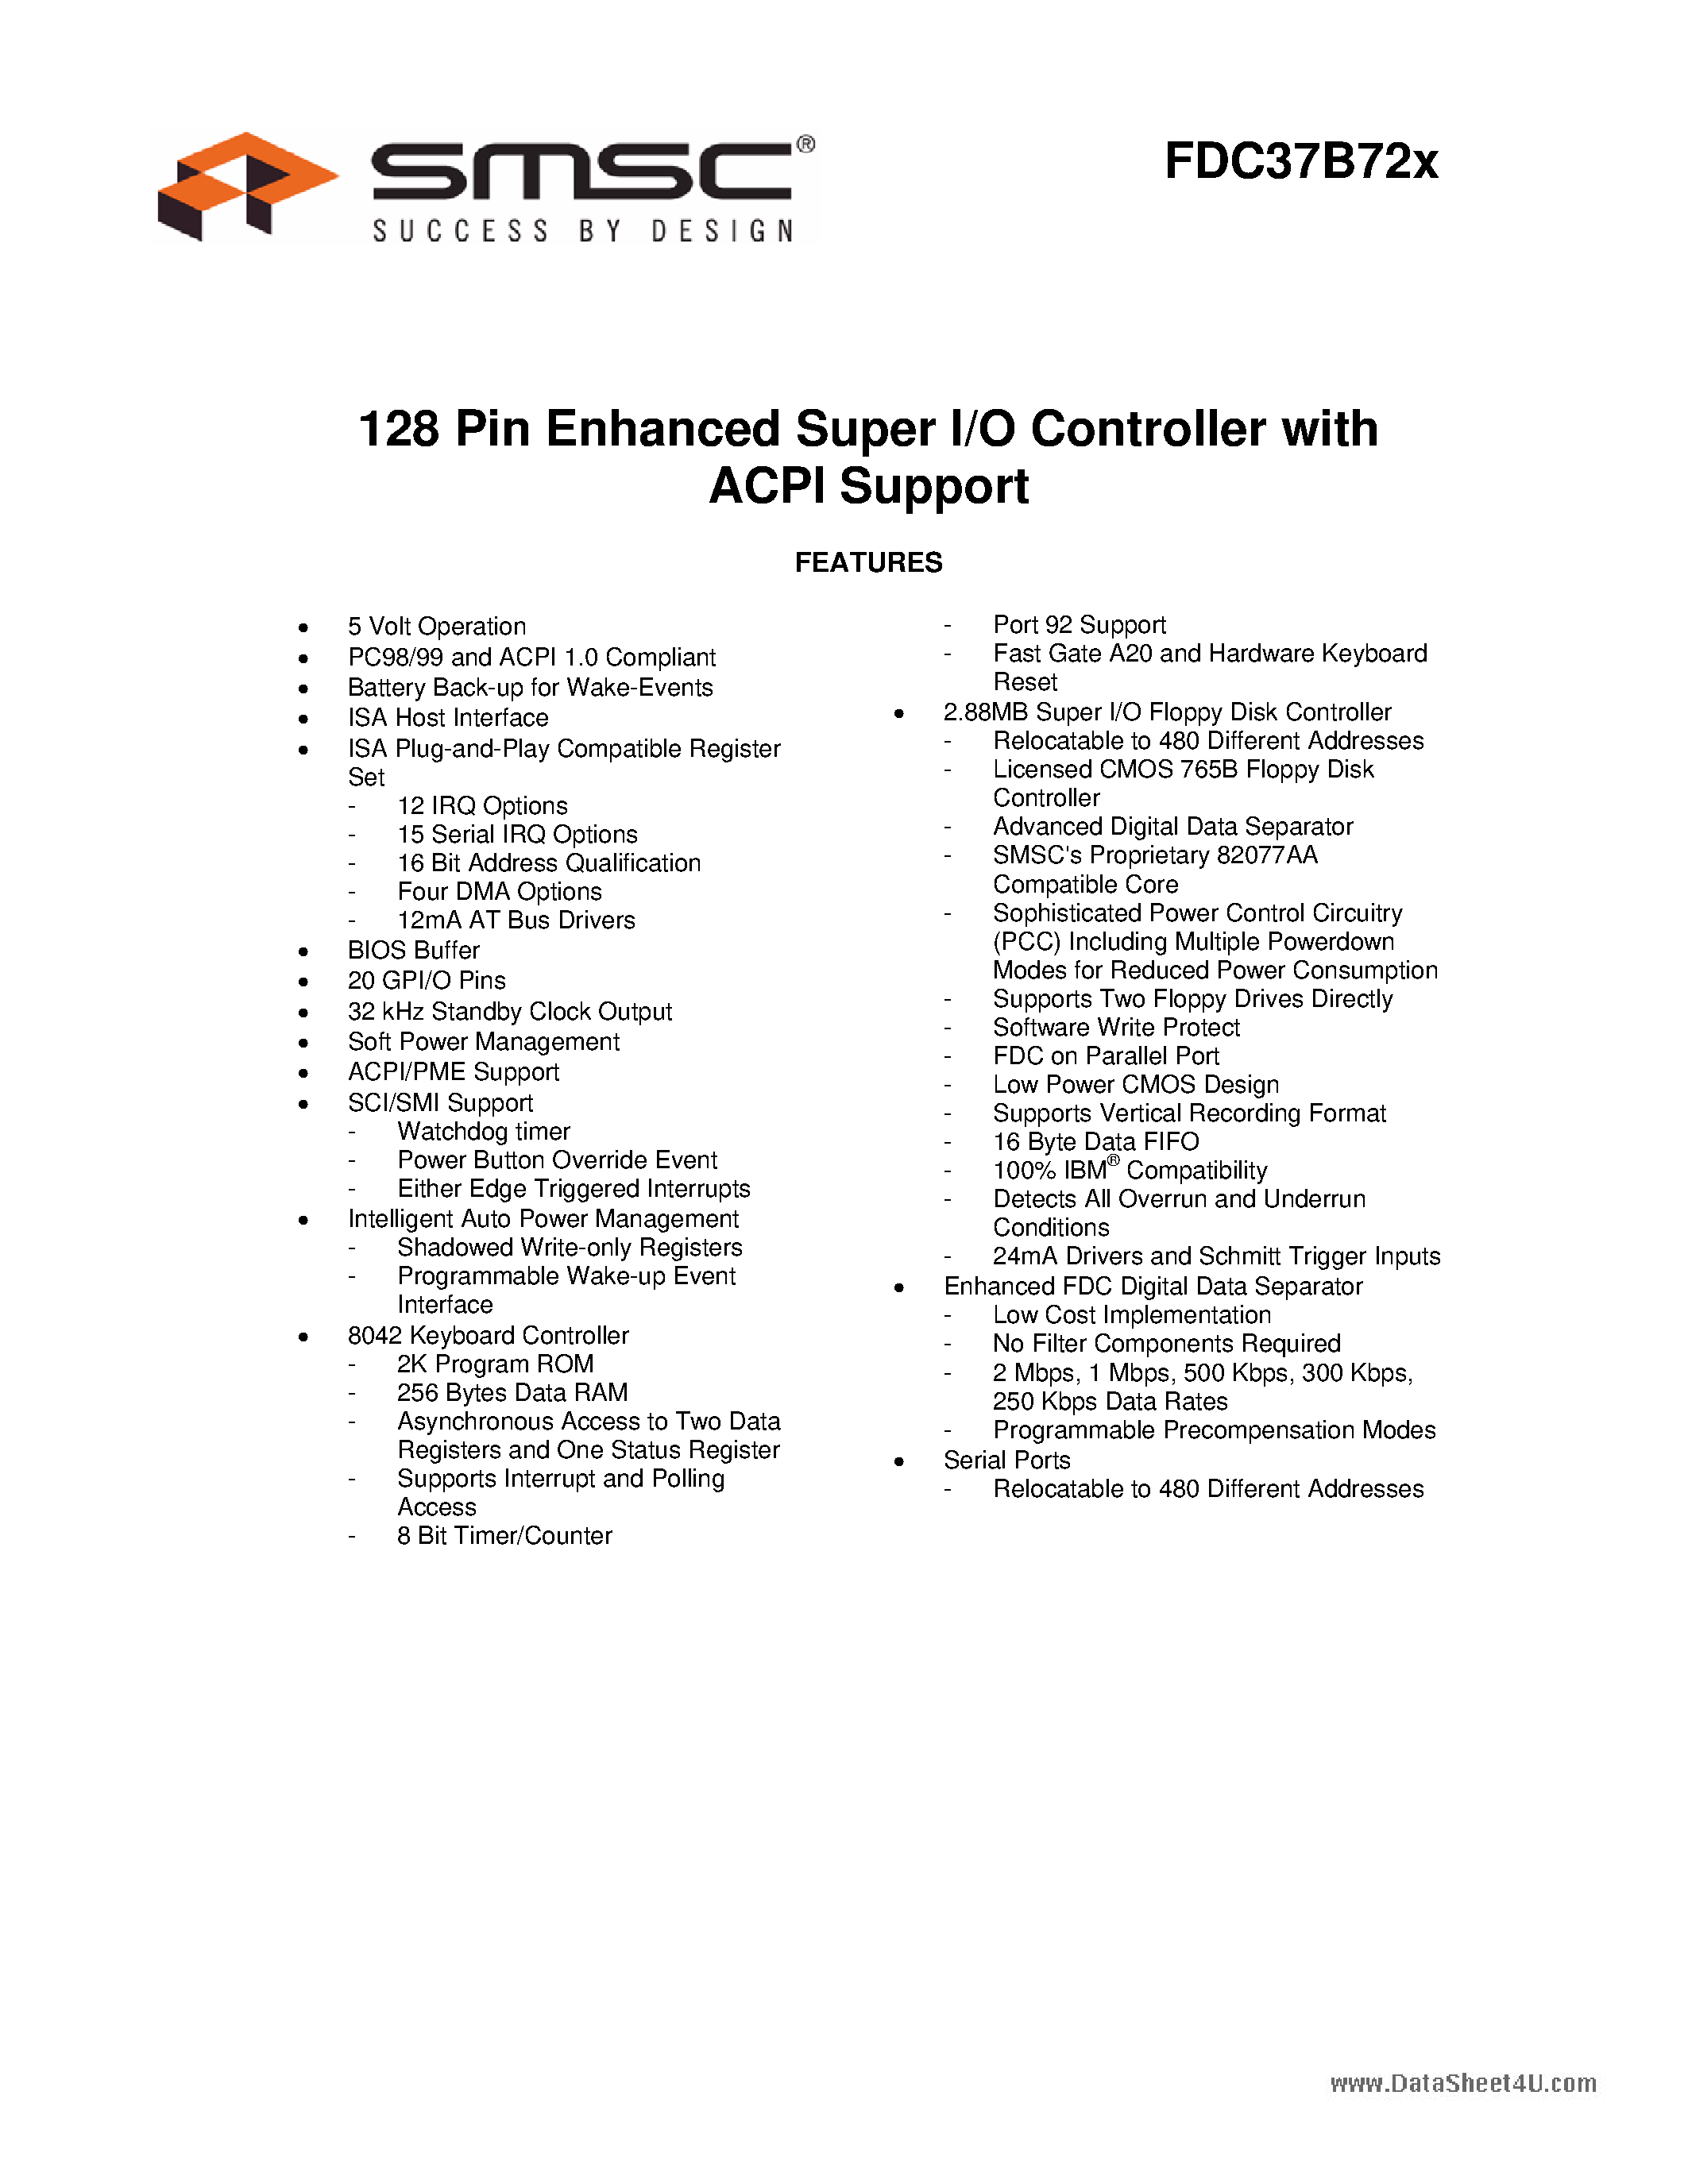 Datasheet FDC37B72X - 128 Pin Enhanced Super I/O Controller page 1